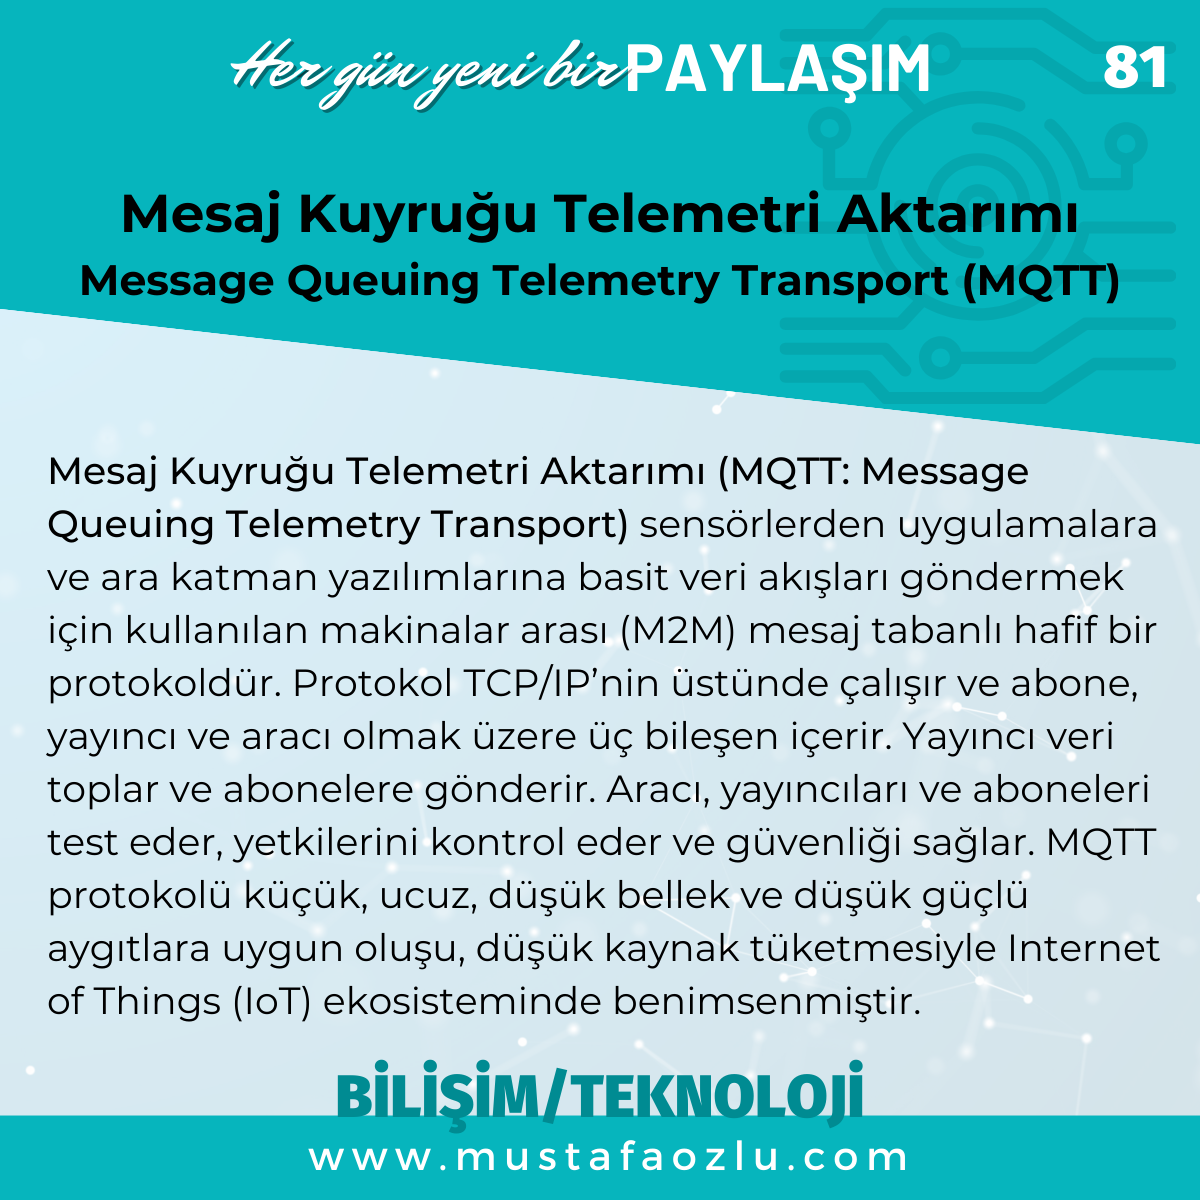 Mesaj Kuyruğu Telemetri Aktarımı
Message Queuing Telemetry Transport (MQTT) - Mustafa ÖZLÜ